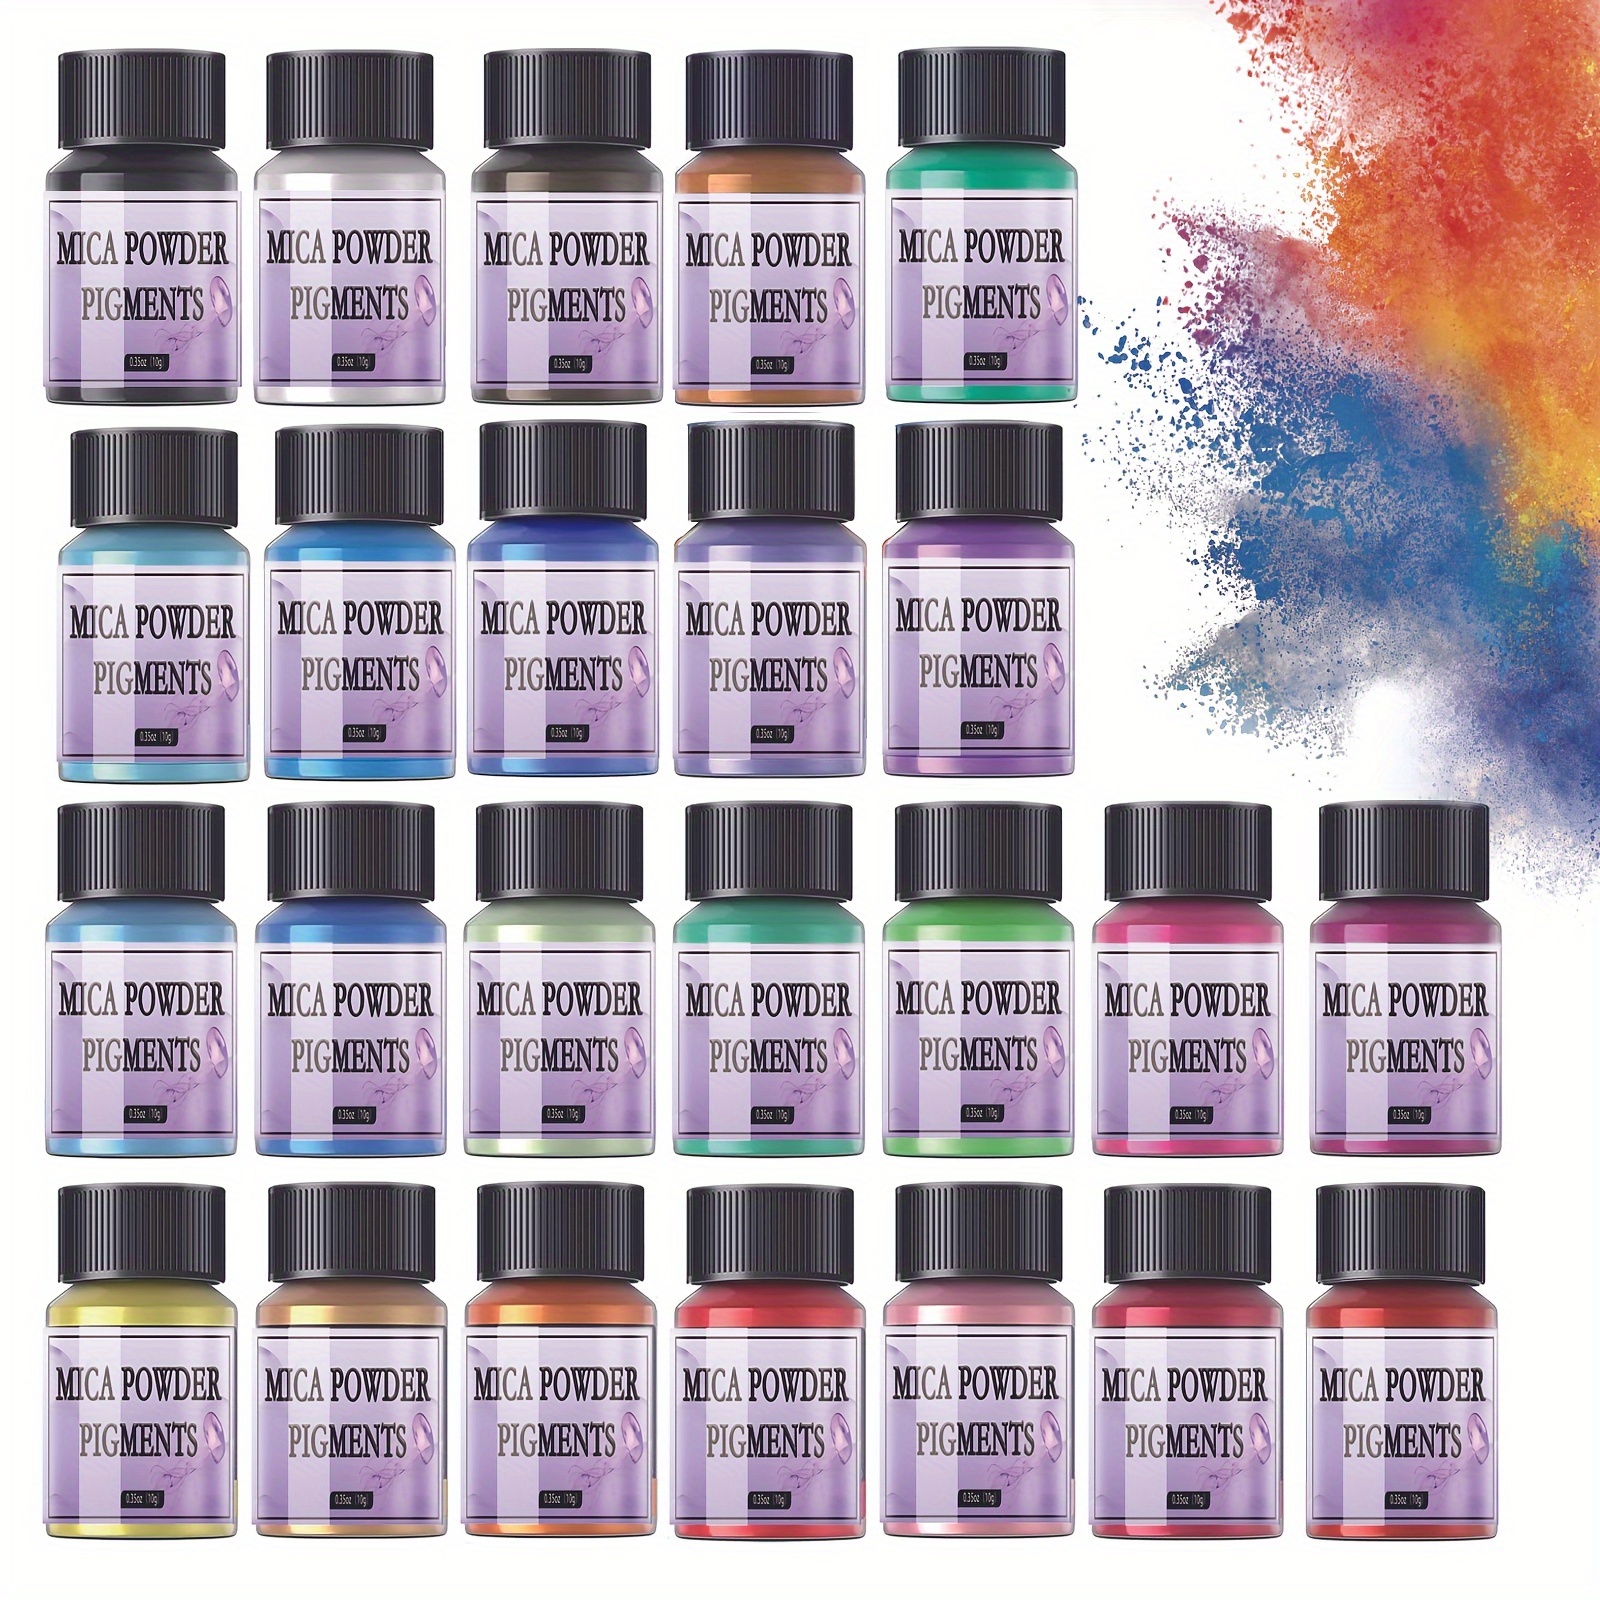 Polvo de mica para resina epoxi, 36 colores, botellas de 0.35 onzas (0.35  oz) de polvo de purpurina de mica, polvo de pigmento de mica para brillo de